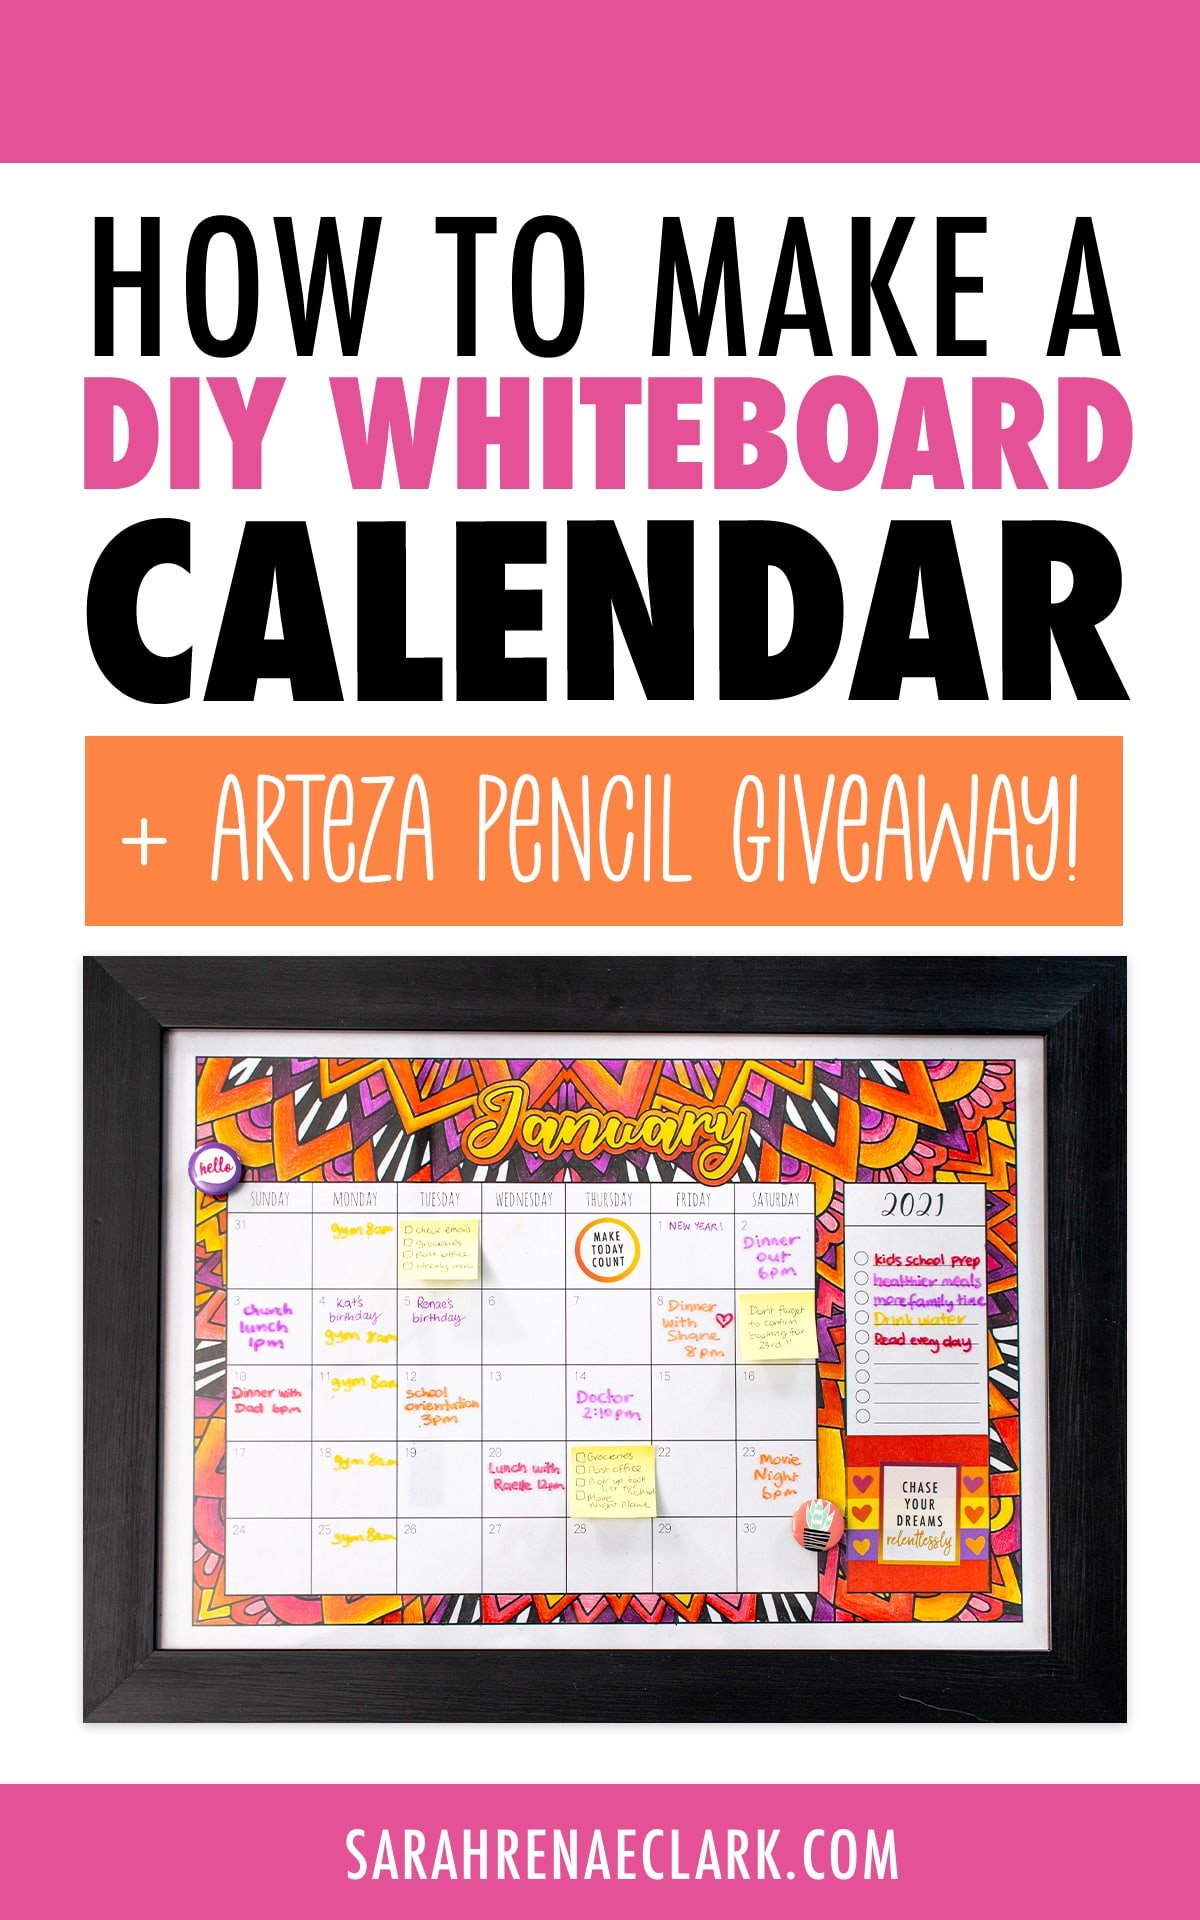 How to Make a DIY Whiteboard Calendar